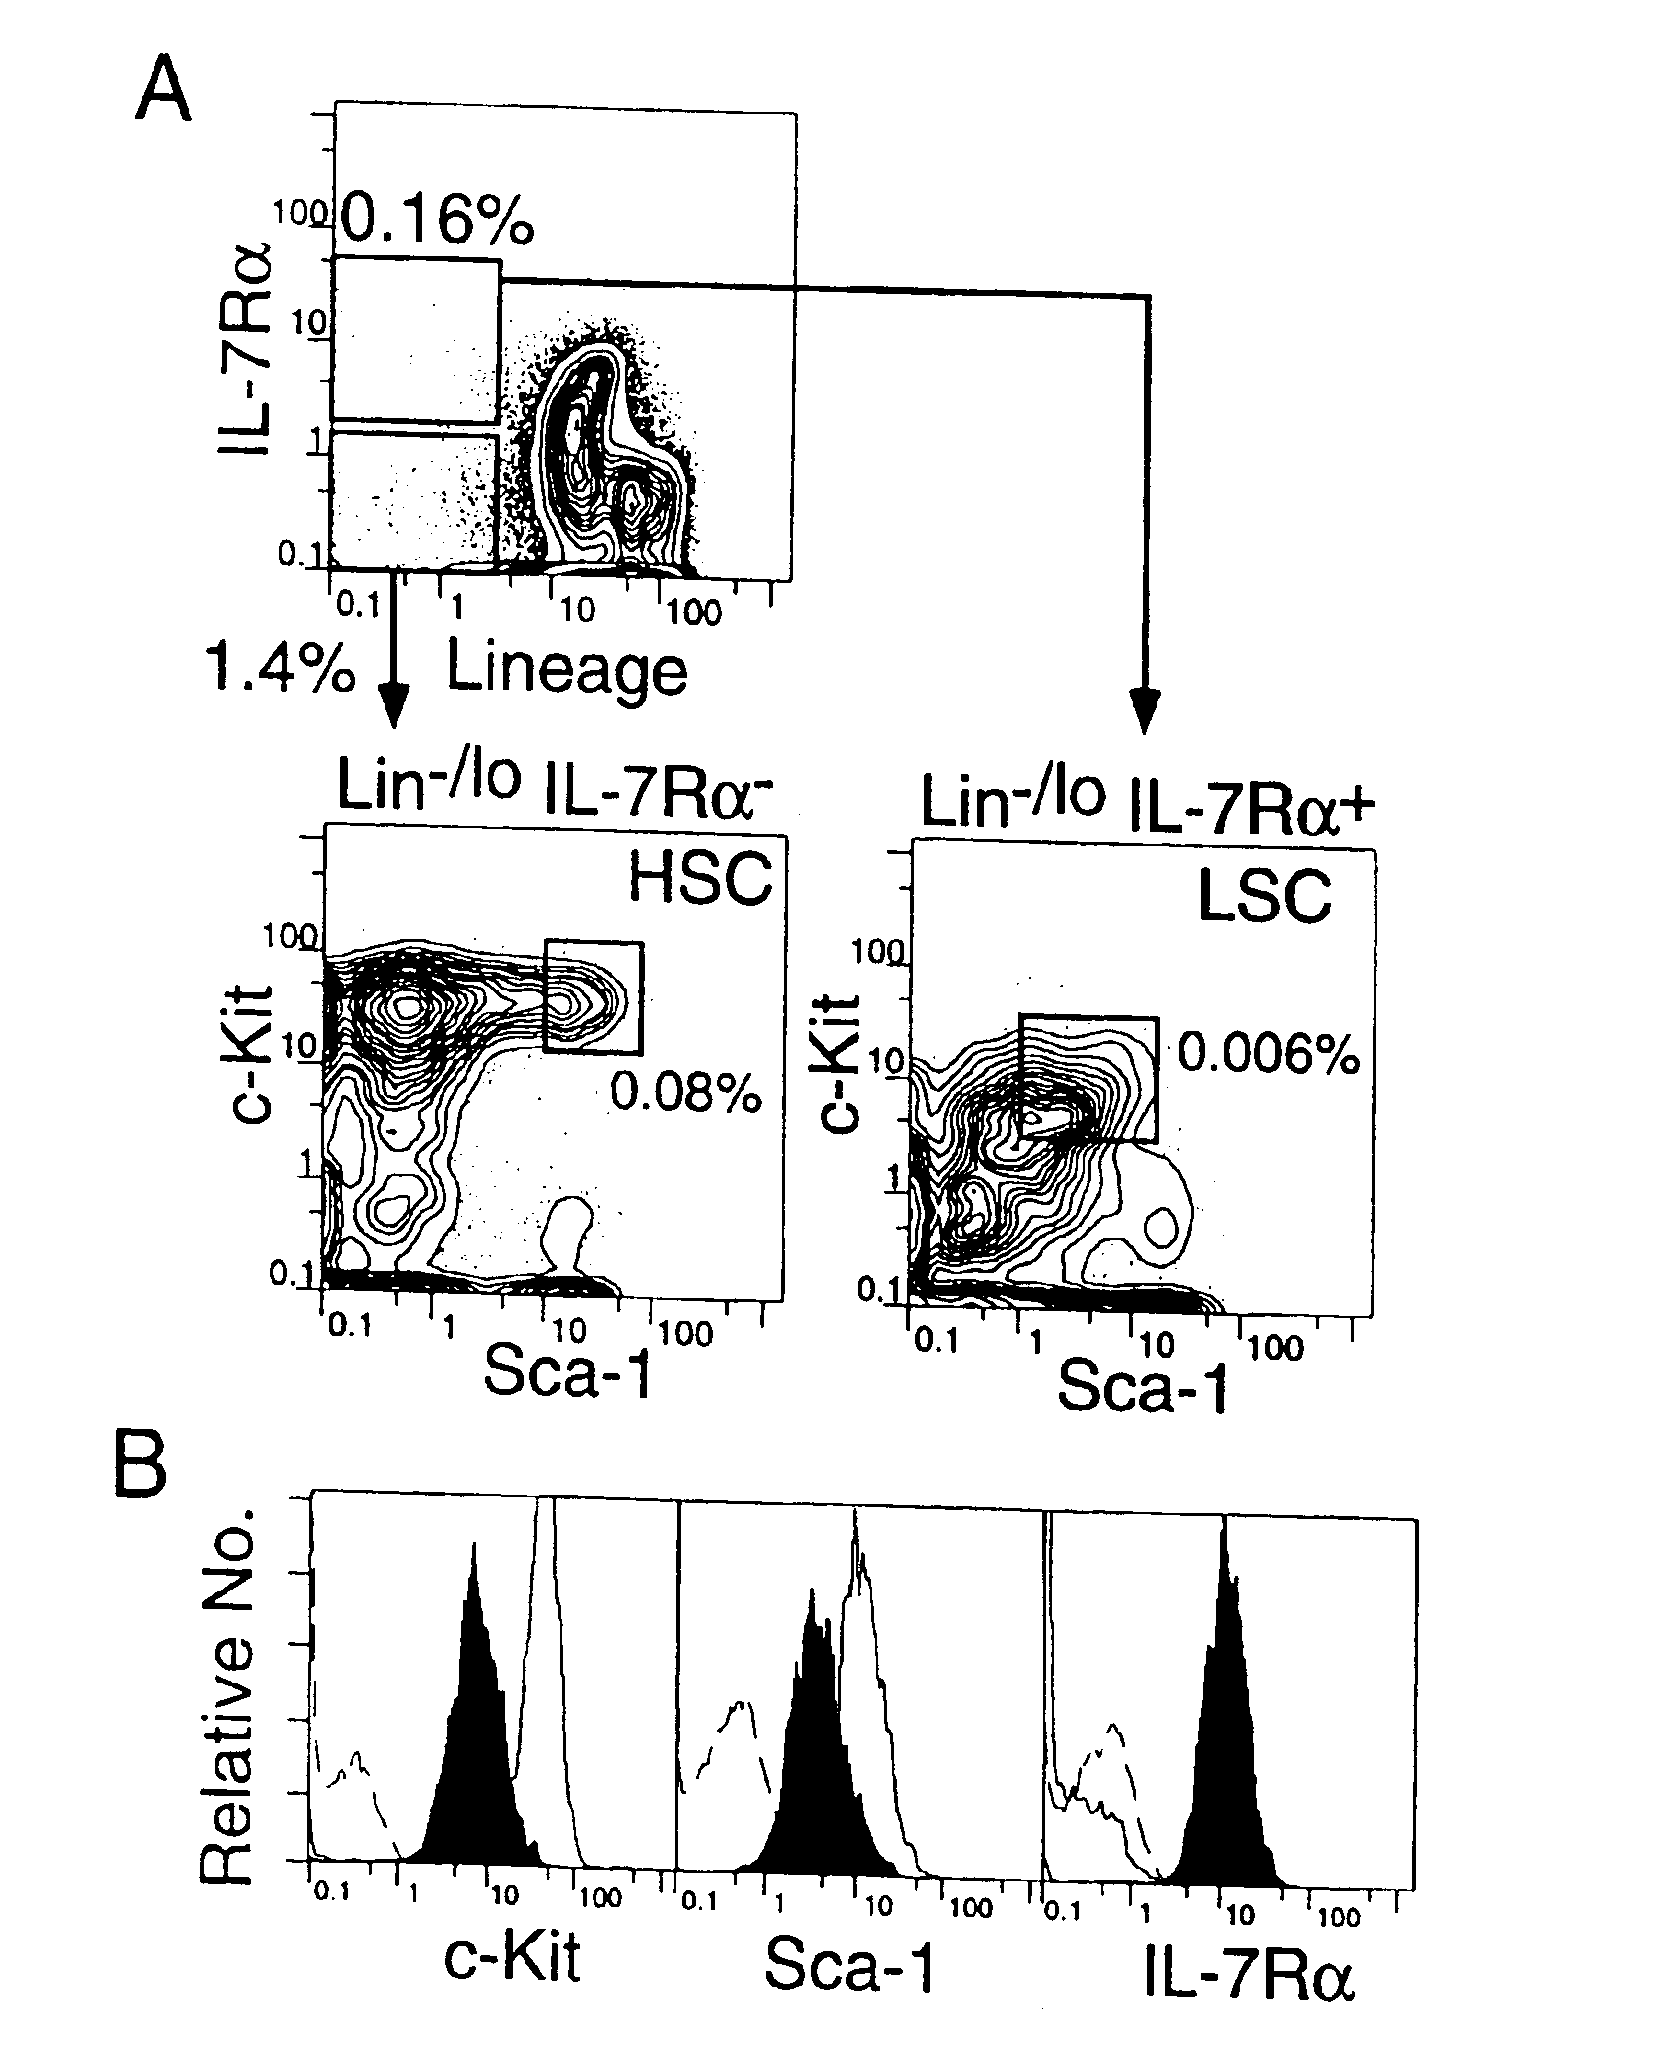 Mammalian common lymphoid progenitor cell